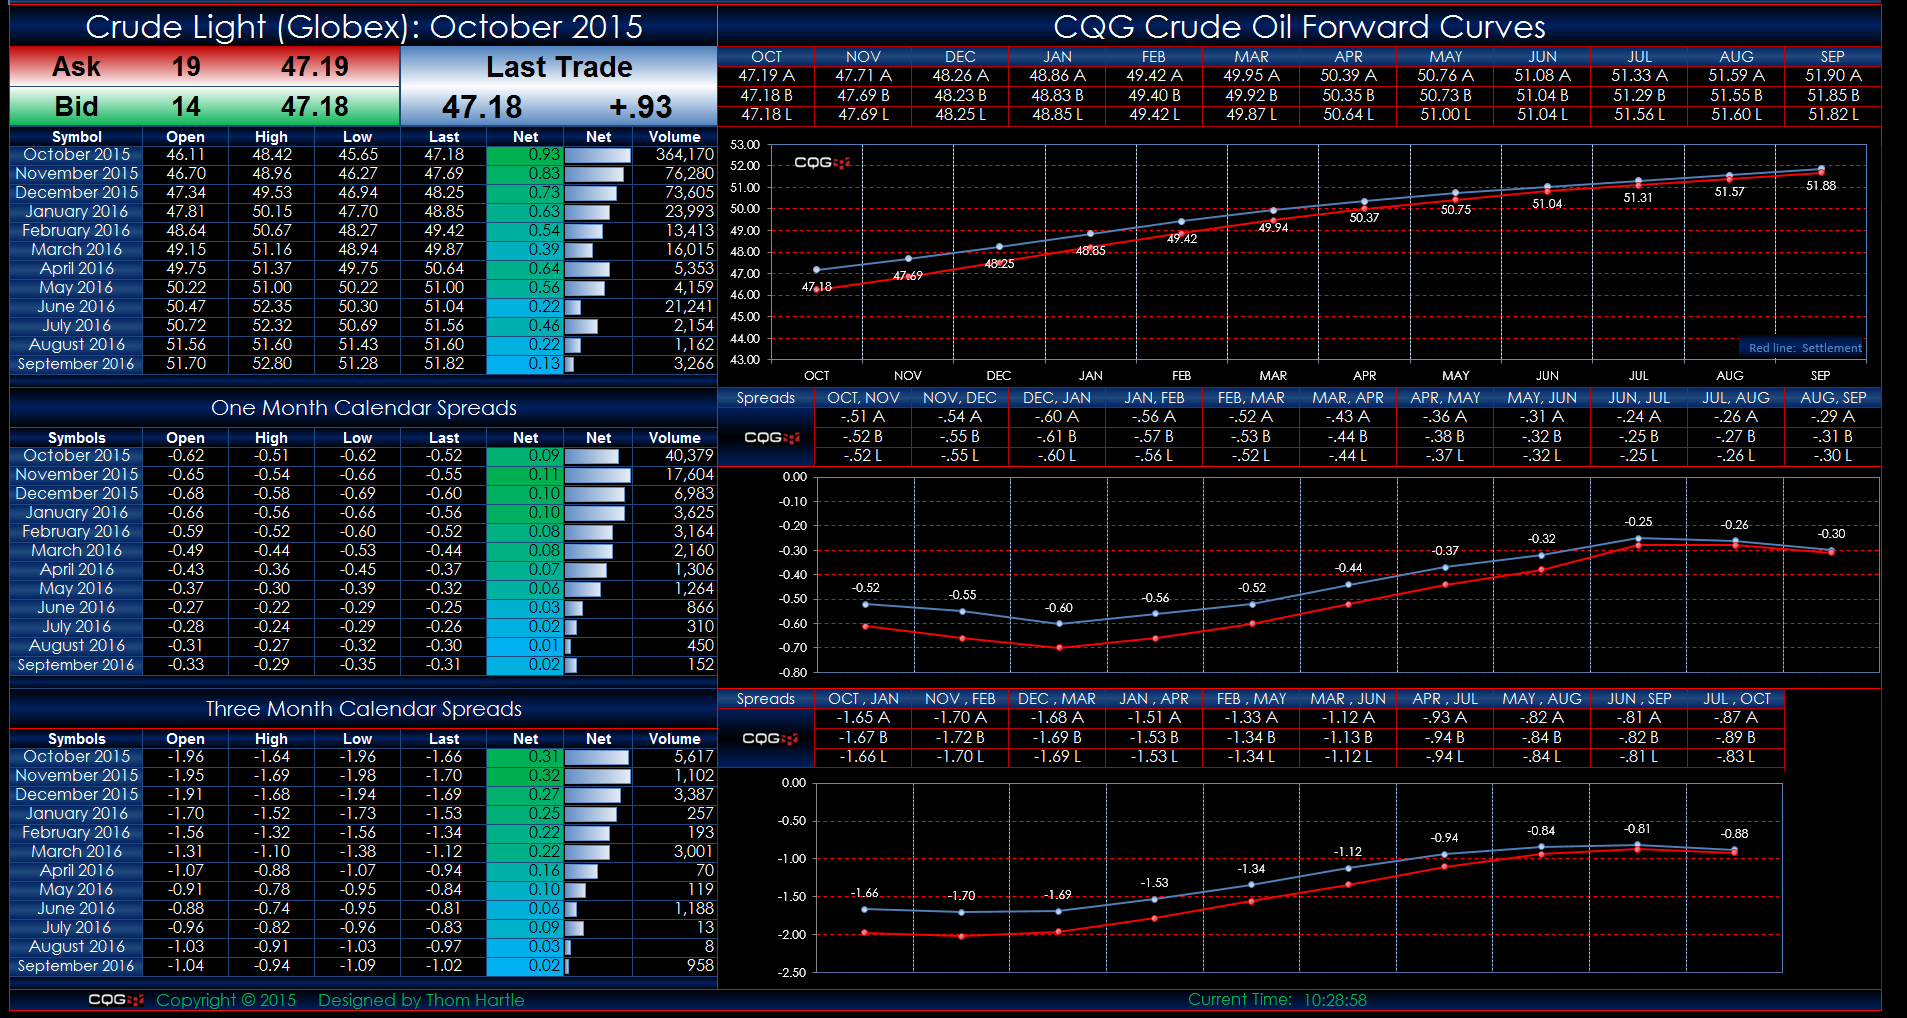 CQG Web Globex CLE Calendar Forward Curves Dashboard.PNG